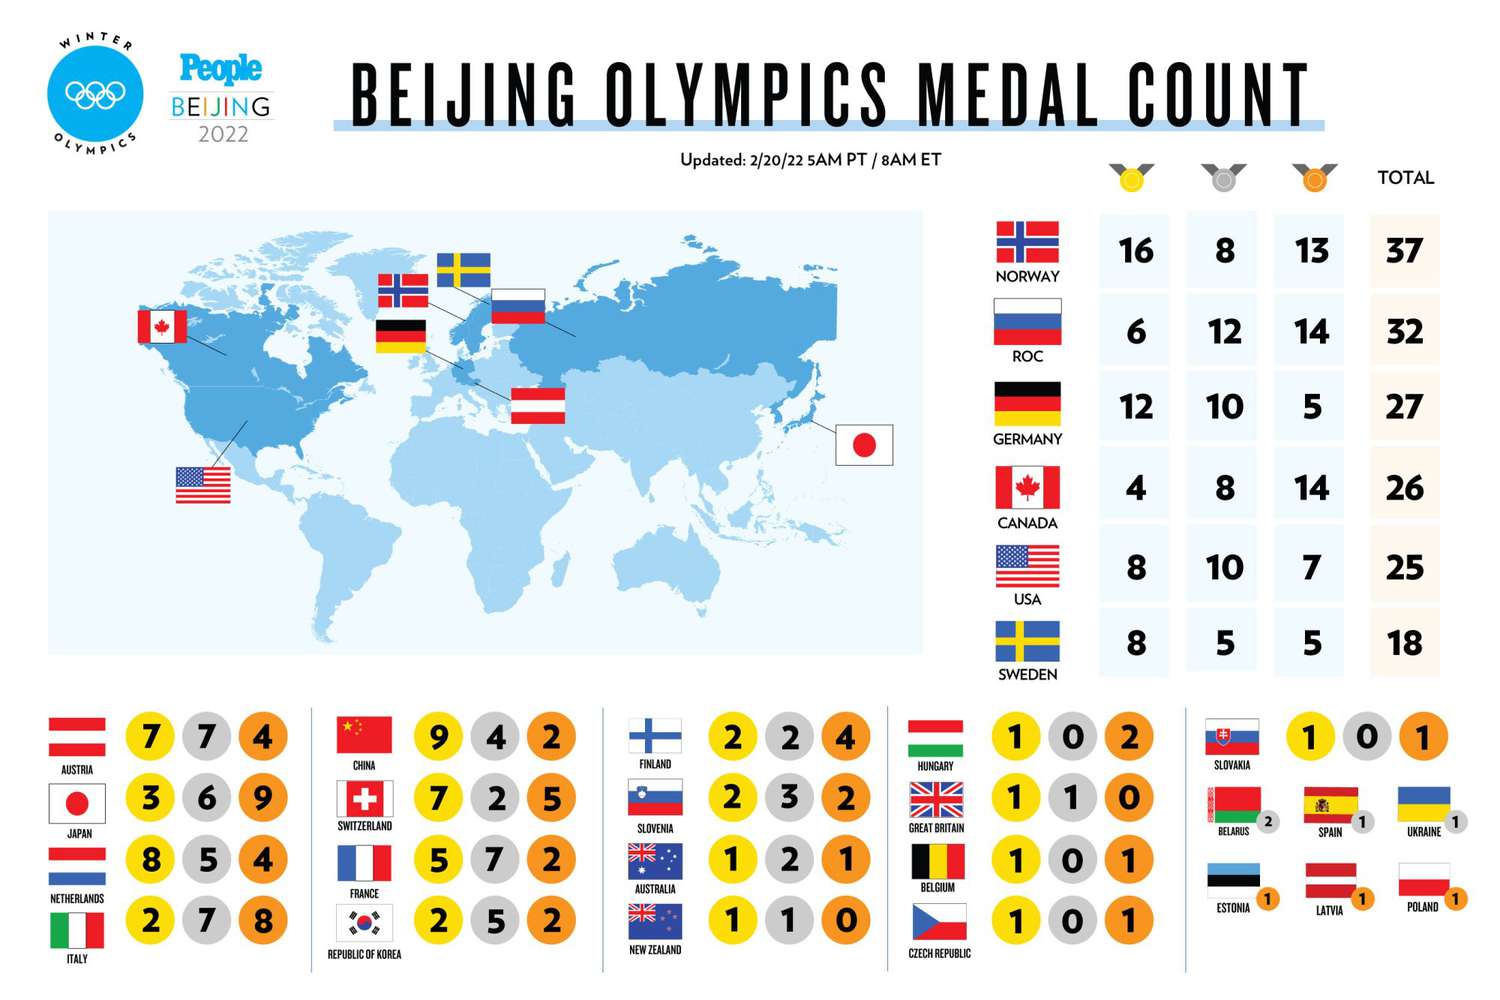 Medal tally olympics 2022